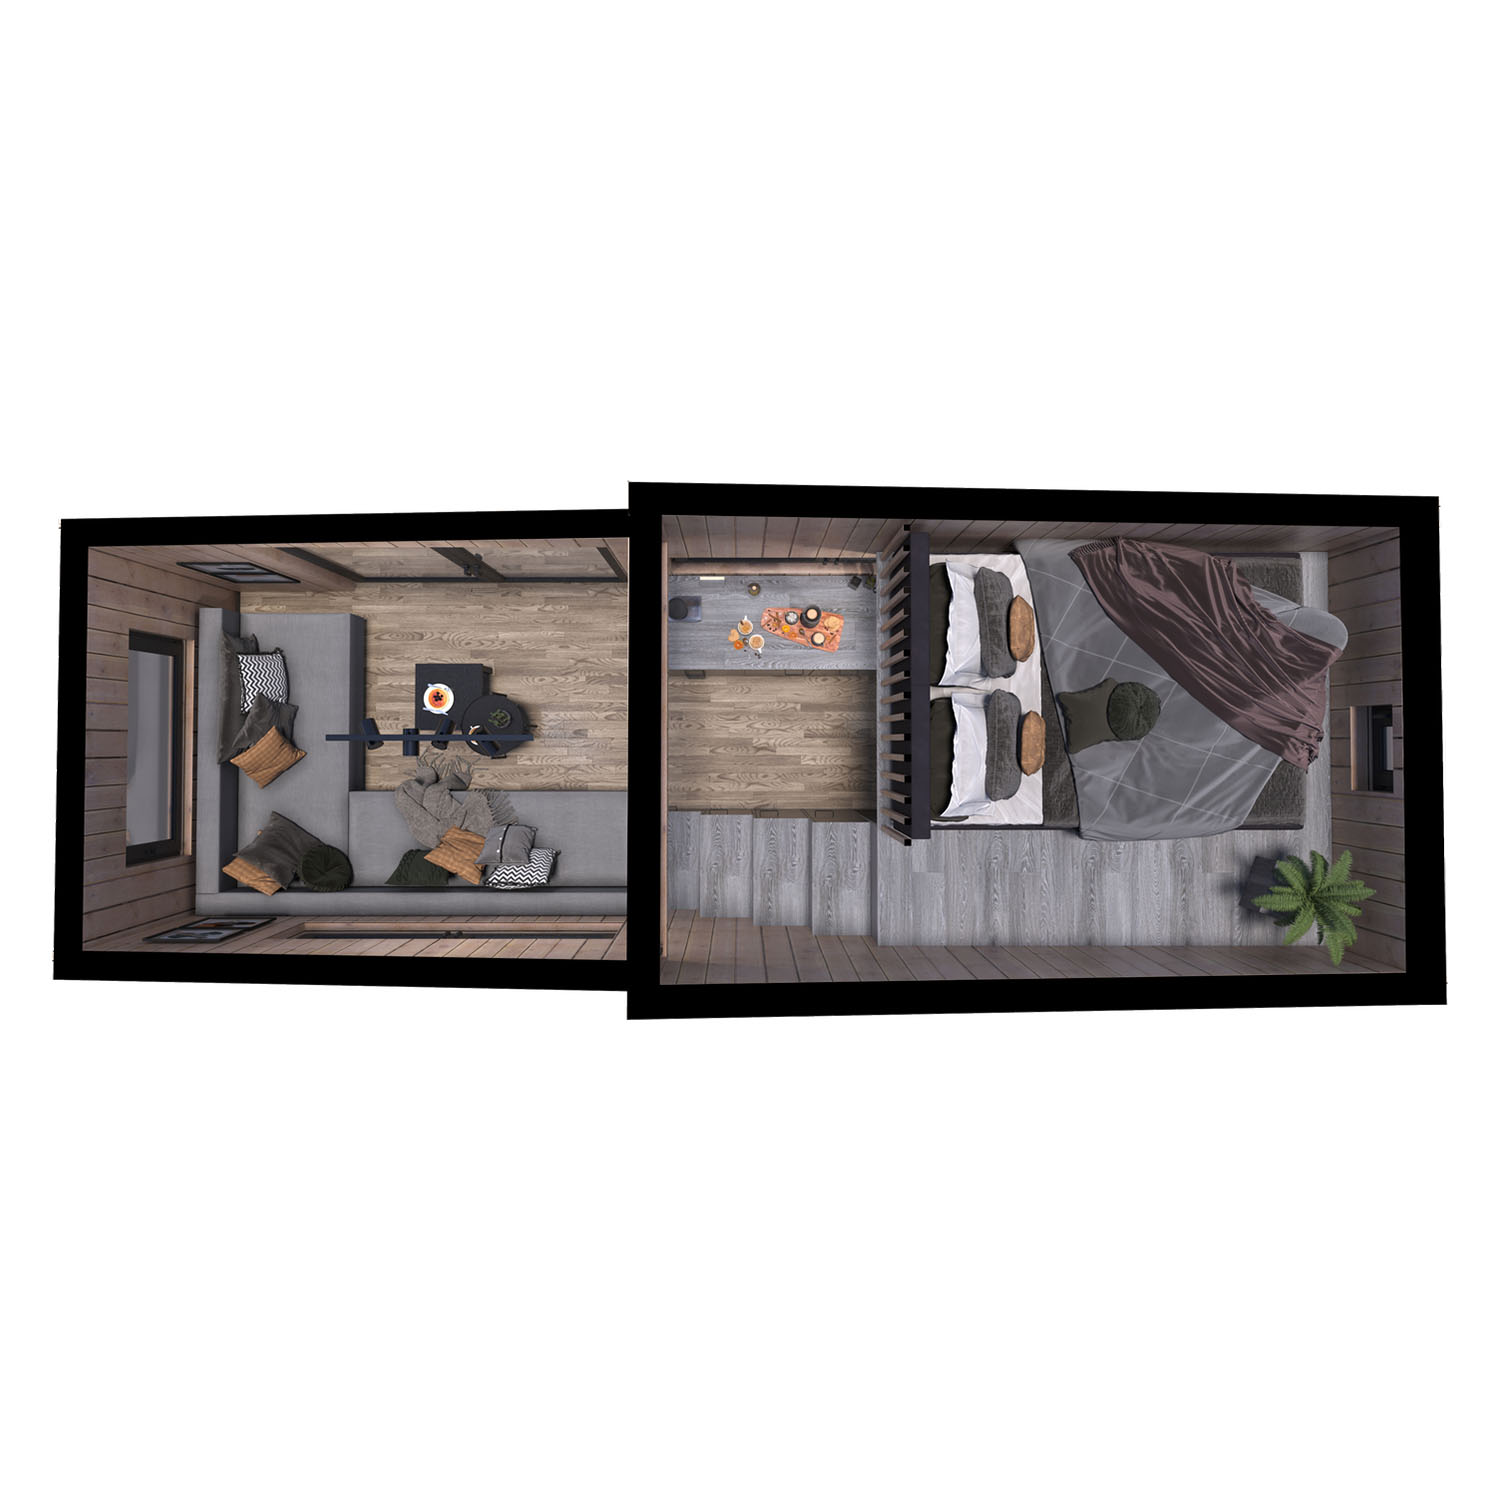 Tiny house, mobile homes, caravans, 25 m2  - Eco Life Model